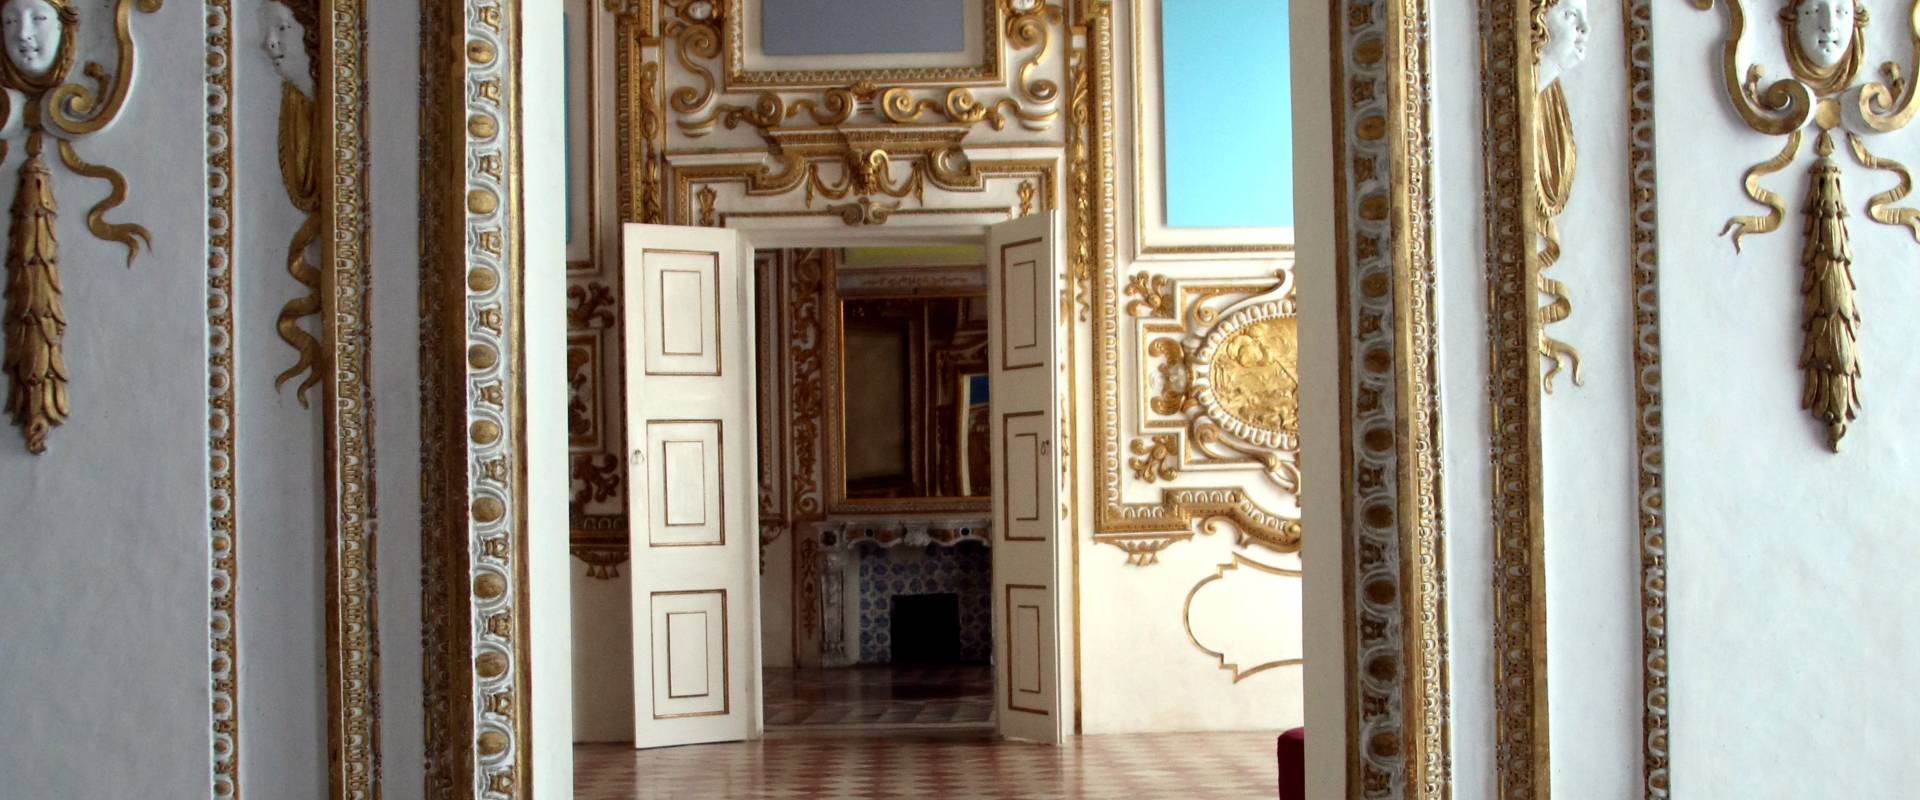 Palazzo Ducale (Sassuolo), Camera di Fetonte 01 photo by Mongolo1984